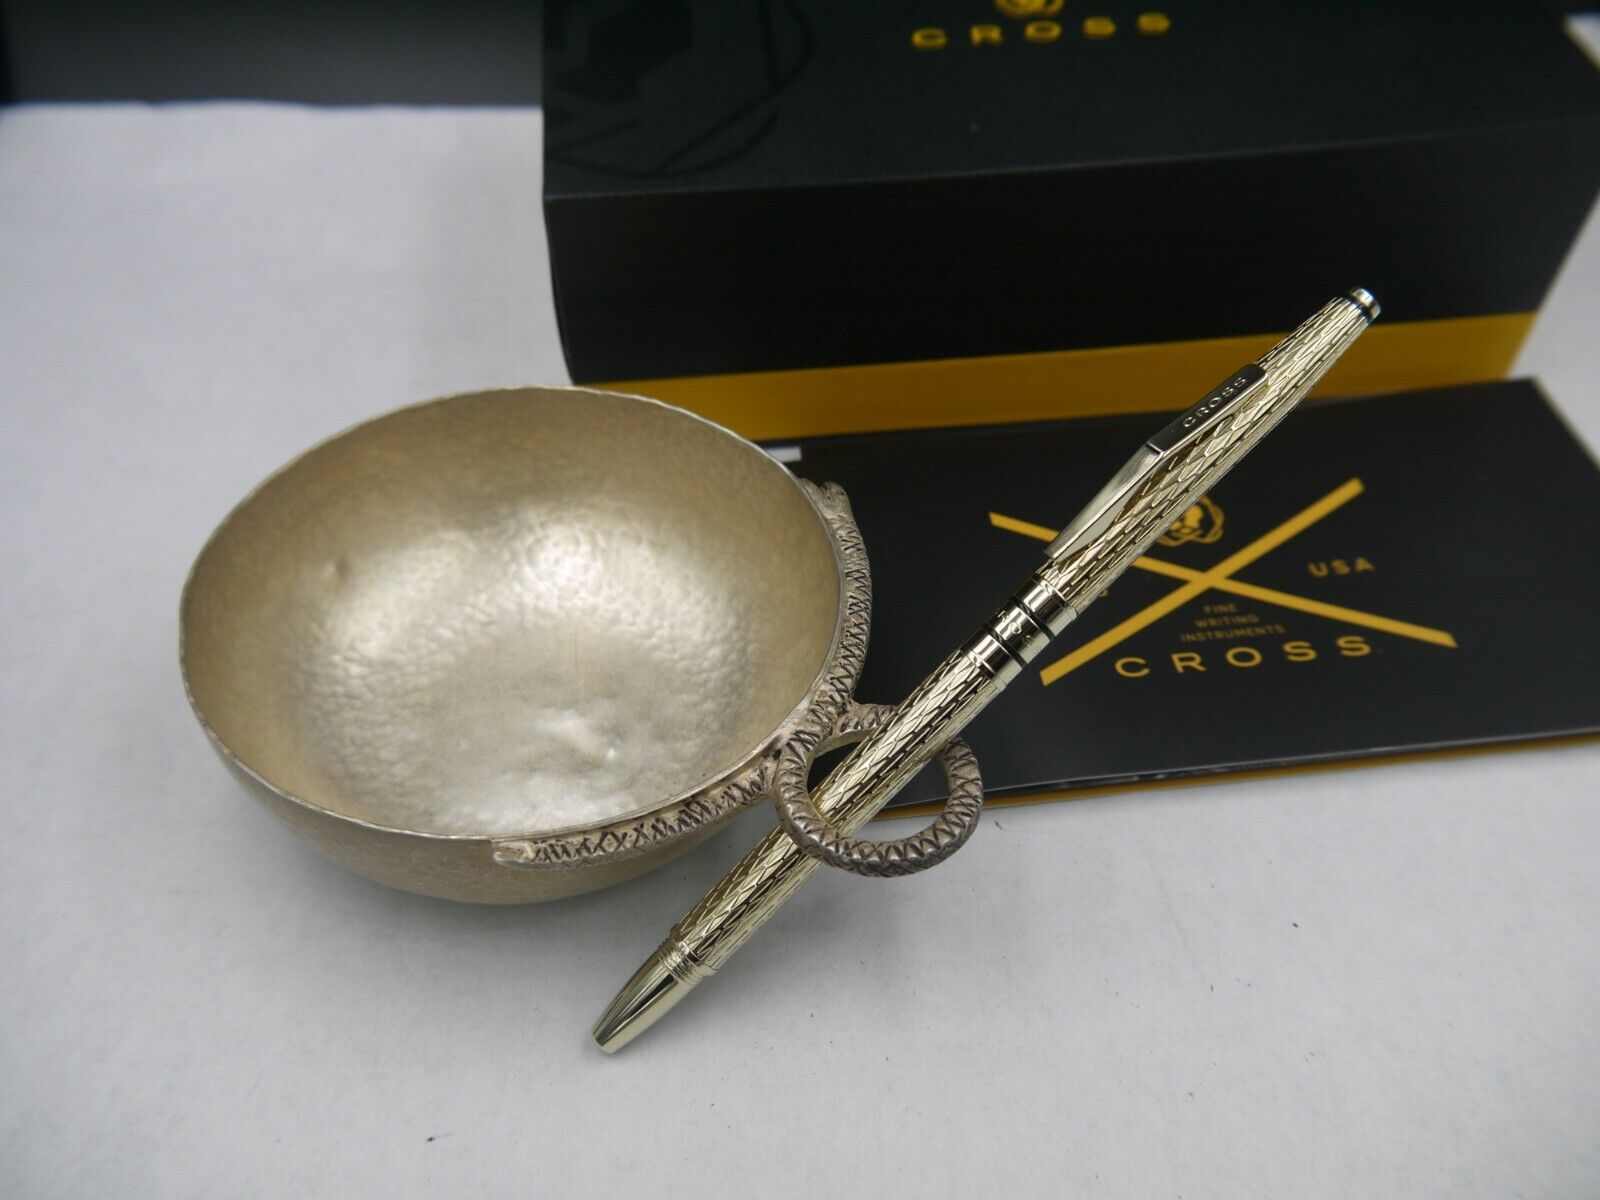 Cross Spire Golden Shimmer Fountaim Pen - 1098 - NEW IN BOX - Beautiful...